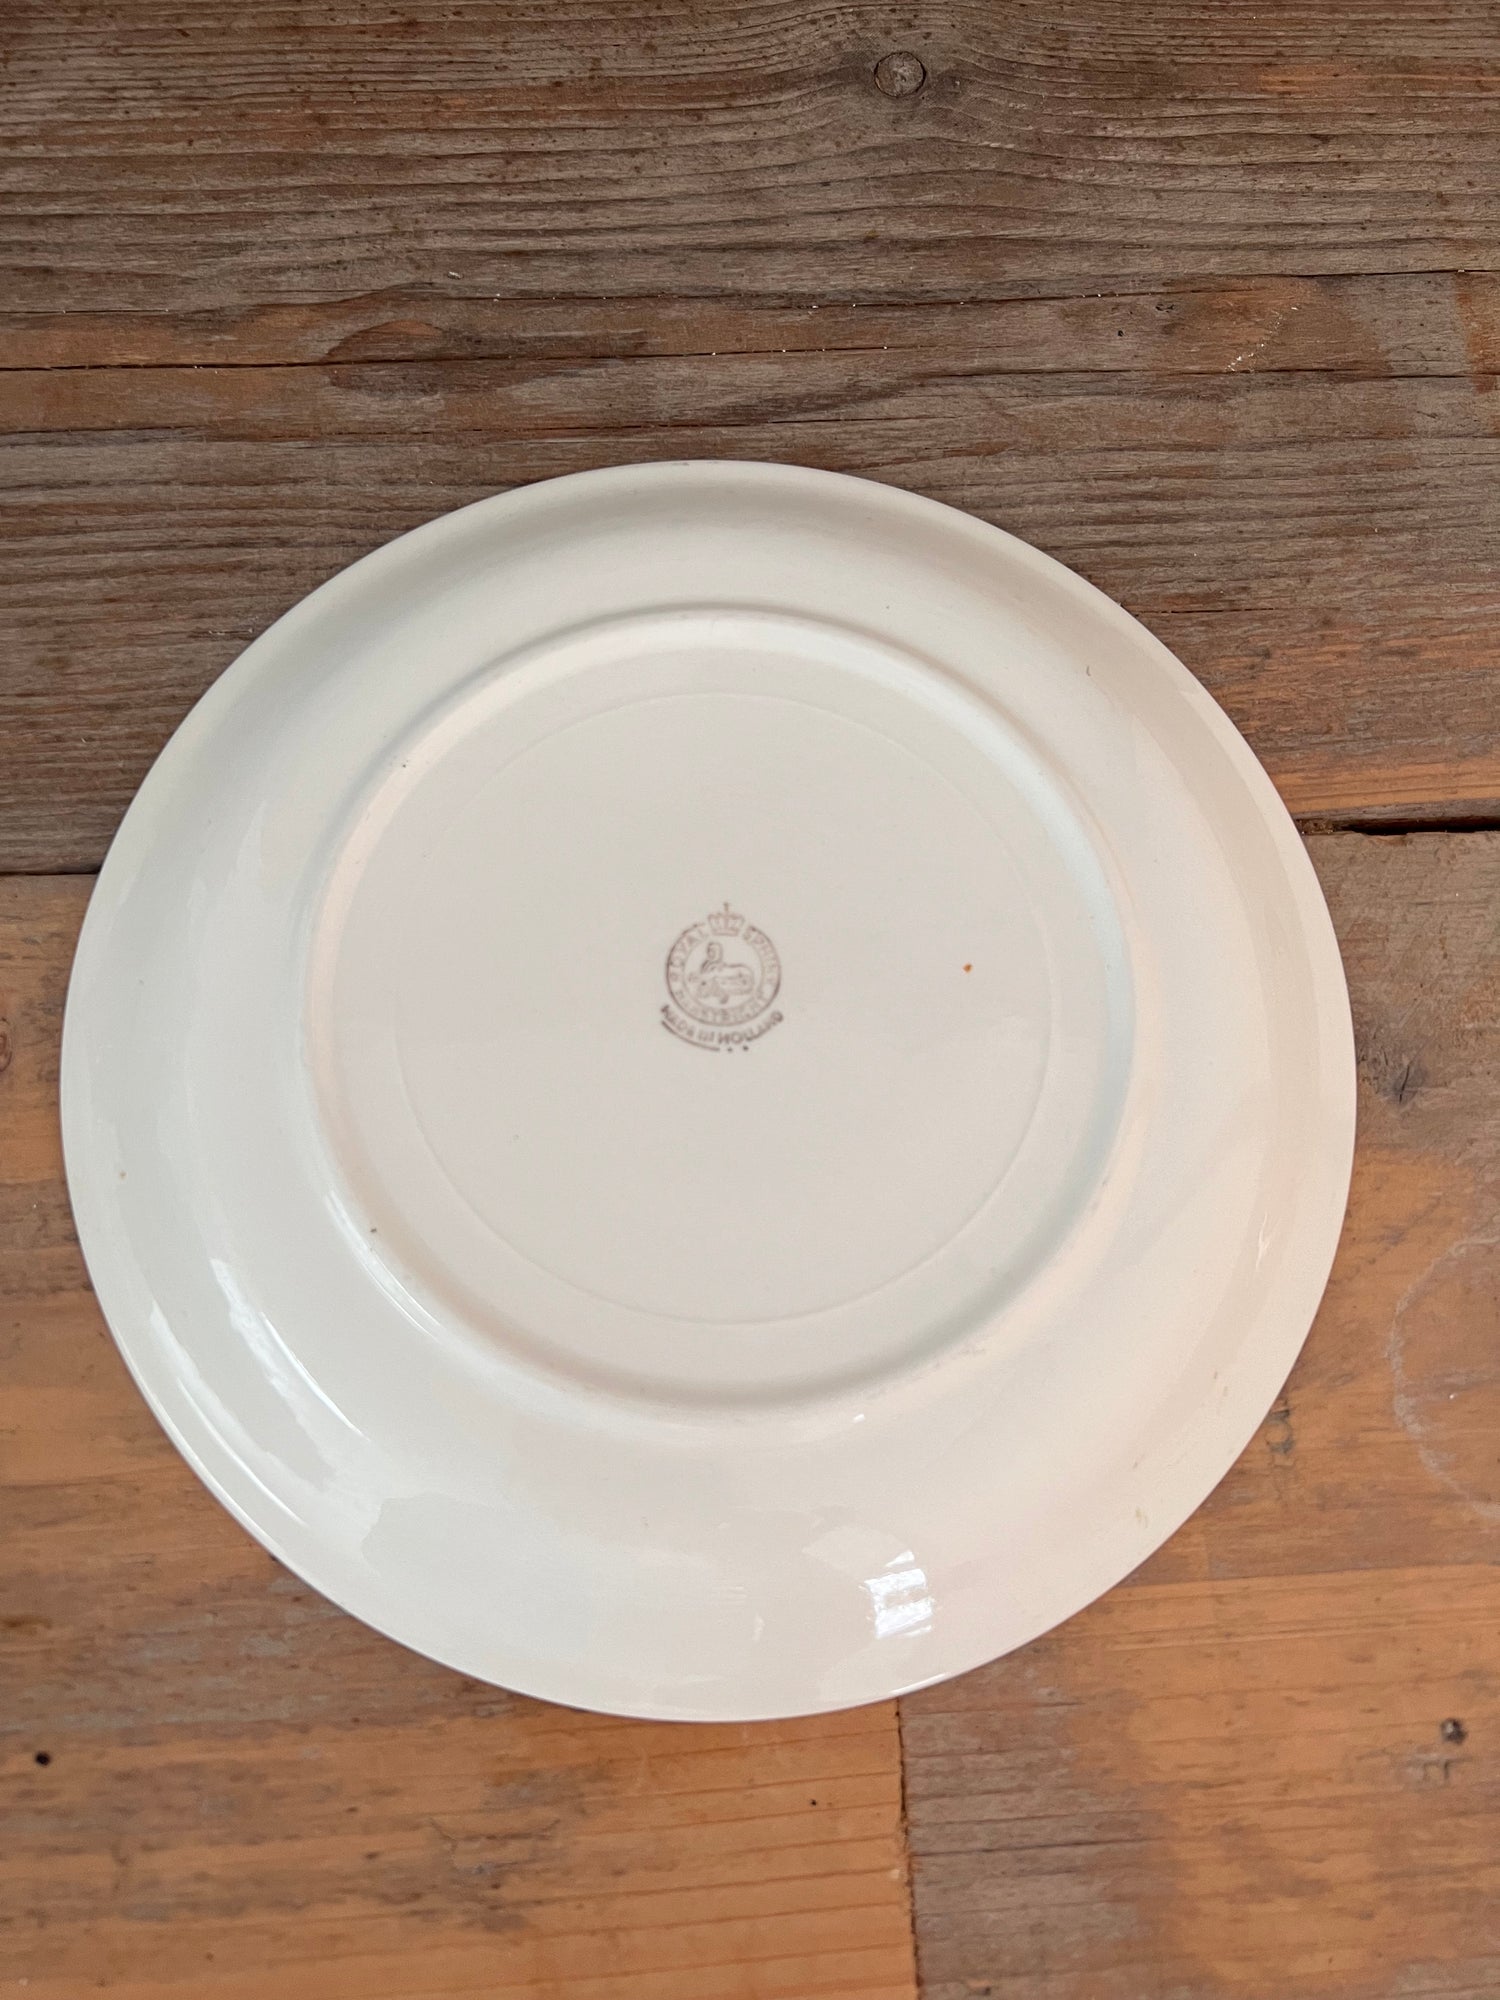 Traditional Spakenburg breakfast plate